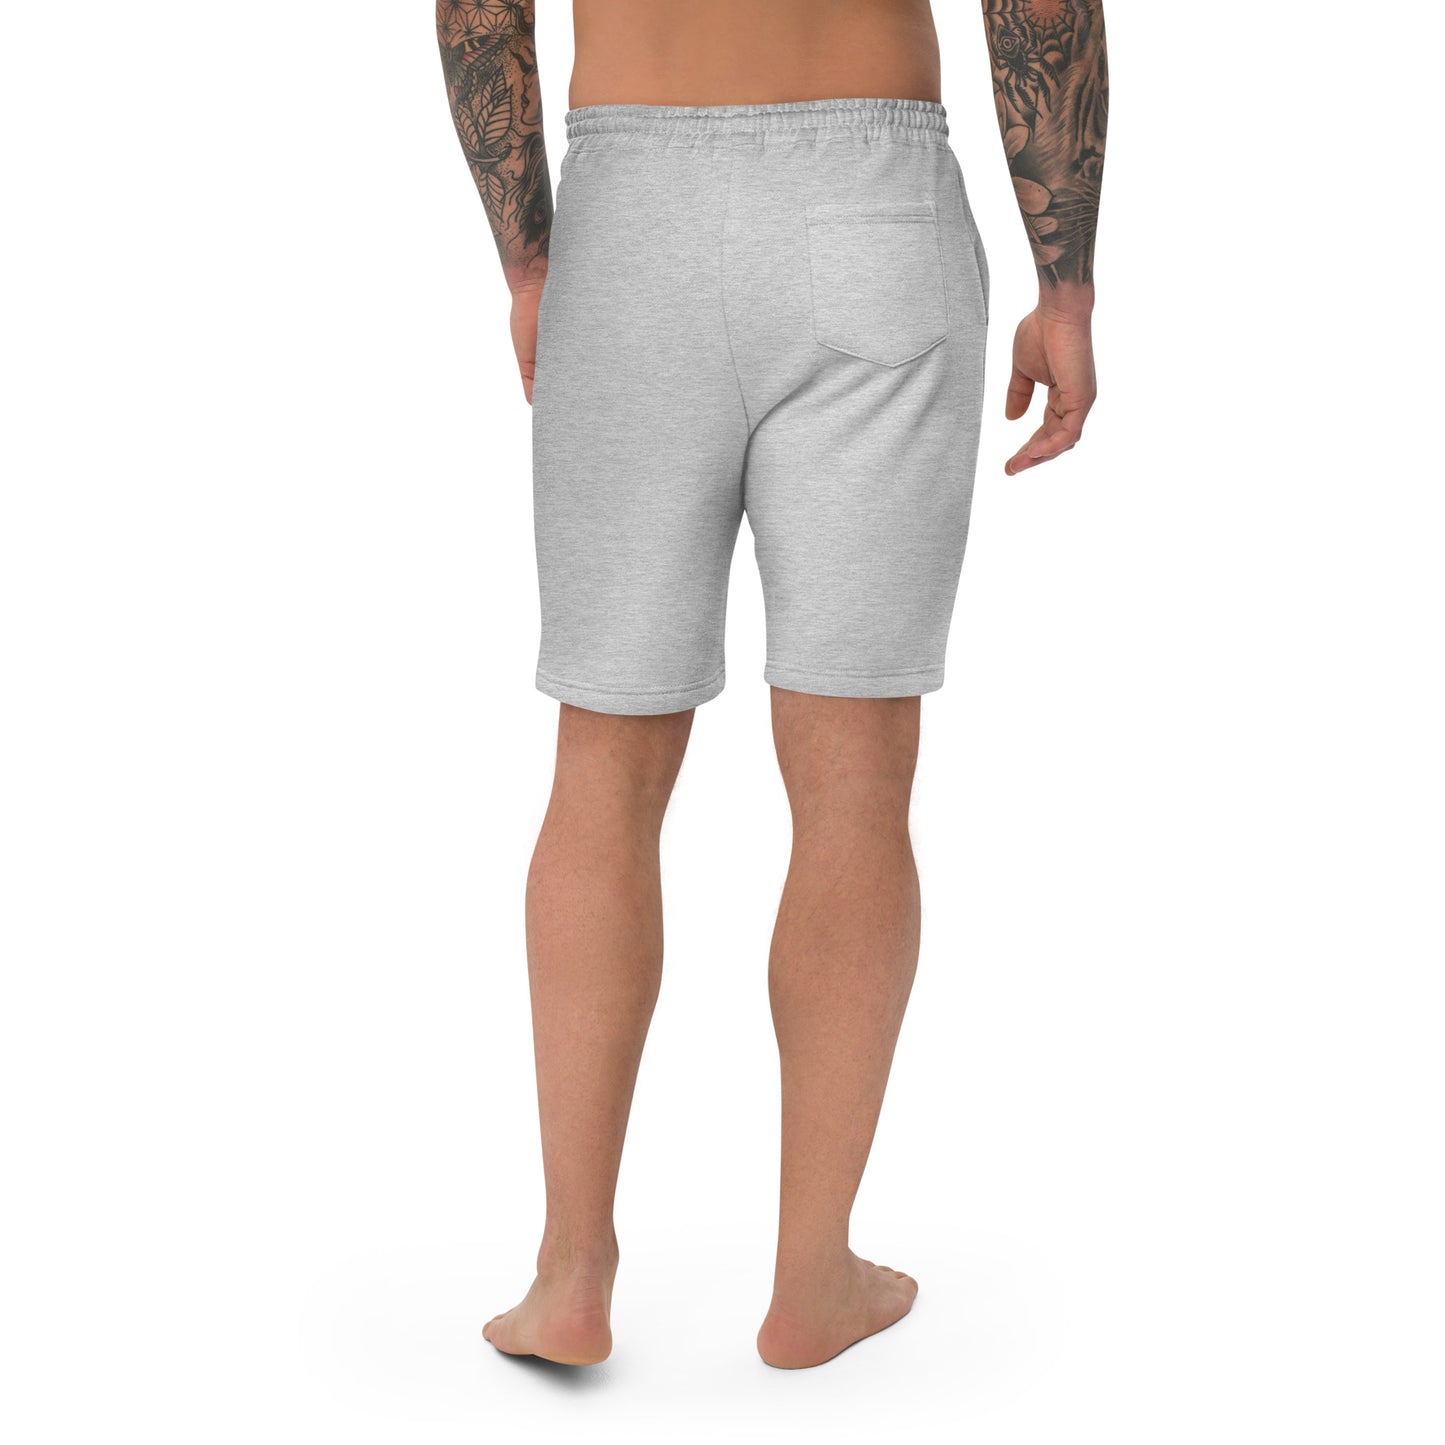 Men's fleece shorts by Hilltop Fox